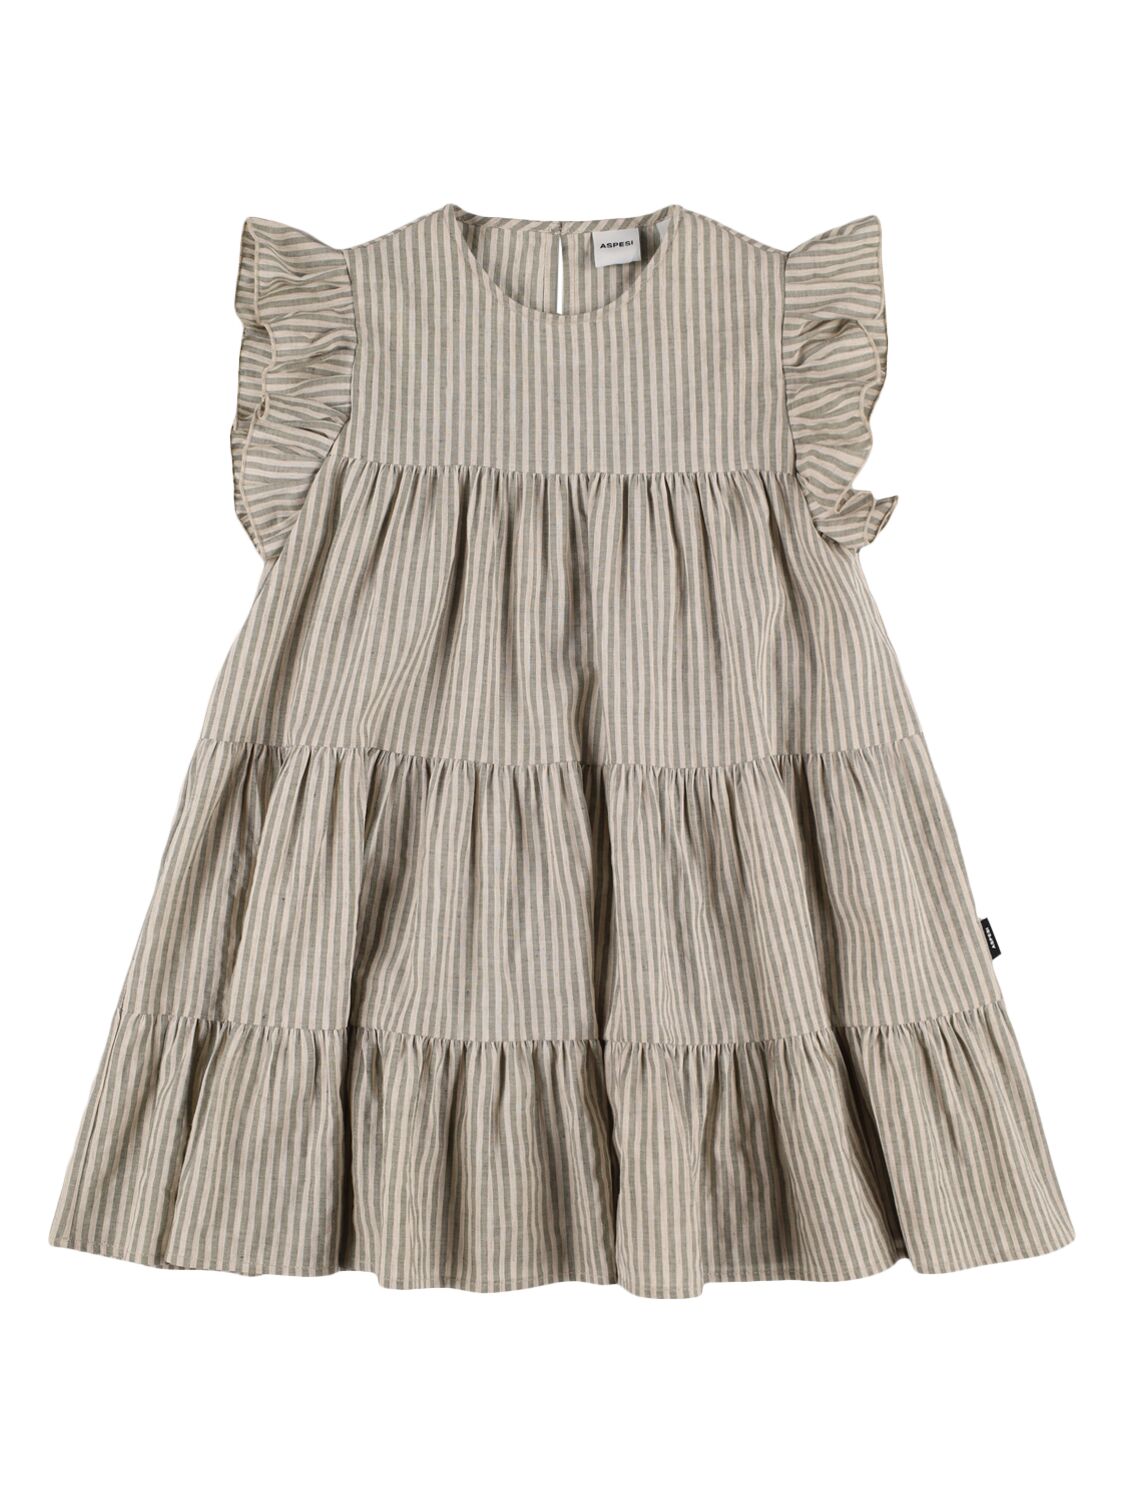 Aspesi Kids' Striped Cotton Blend Dress In Beige